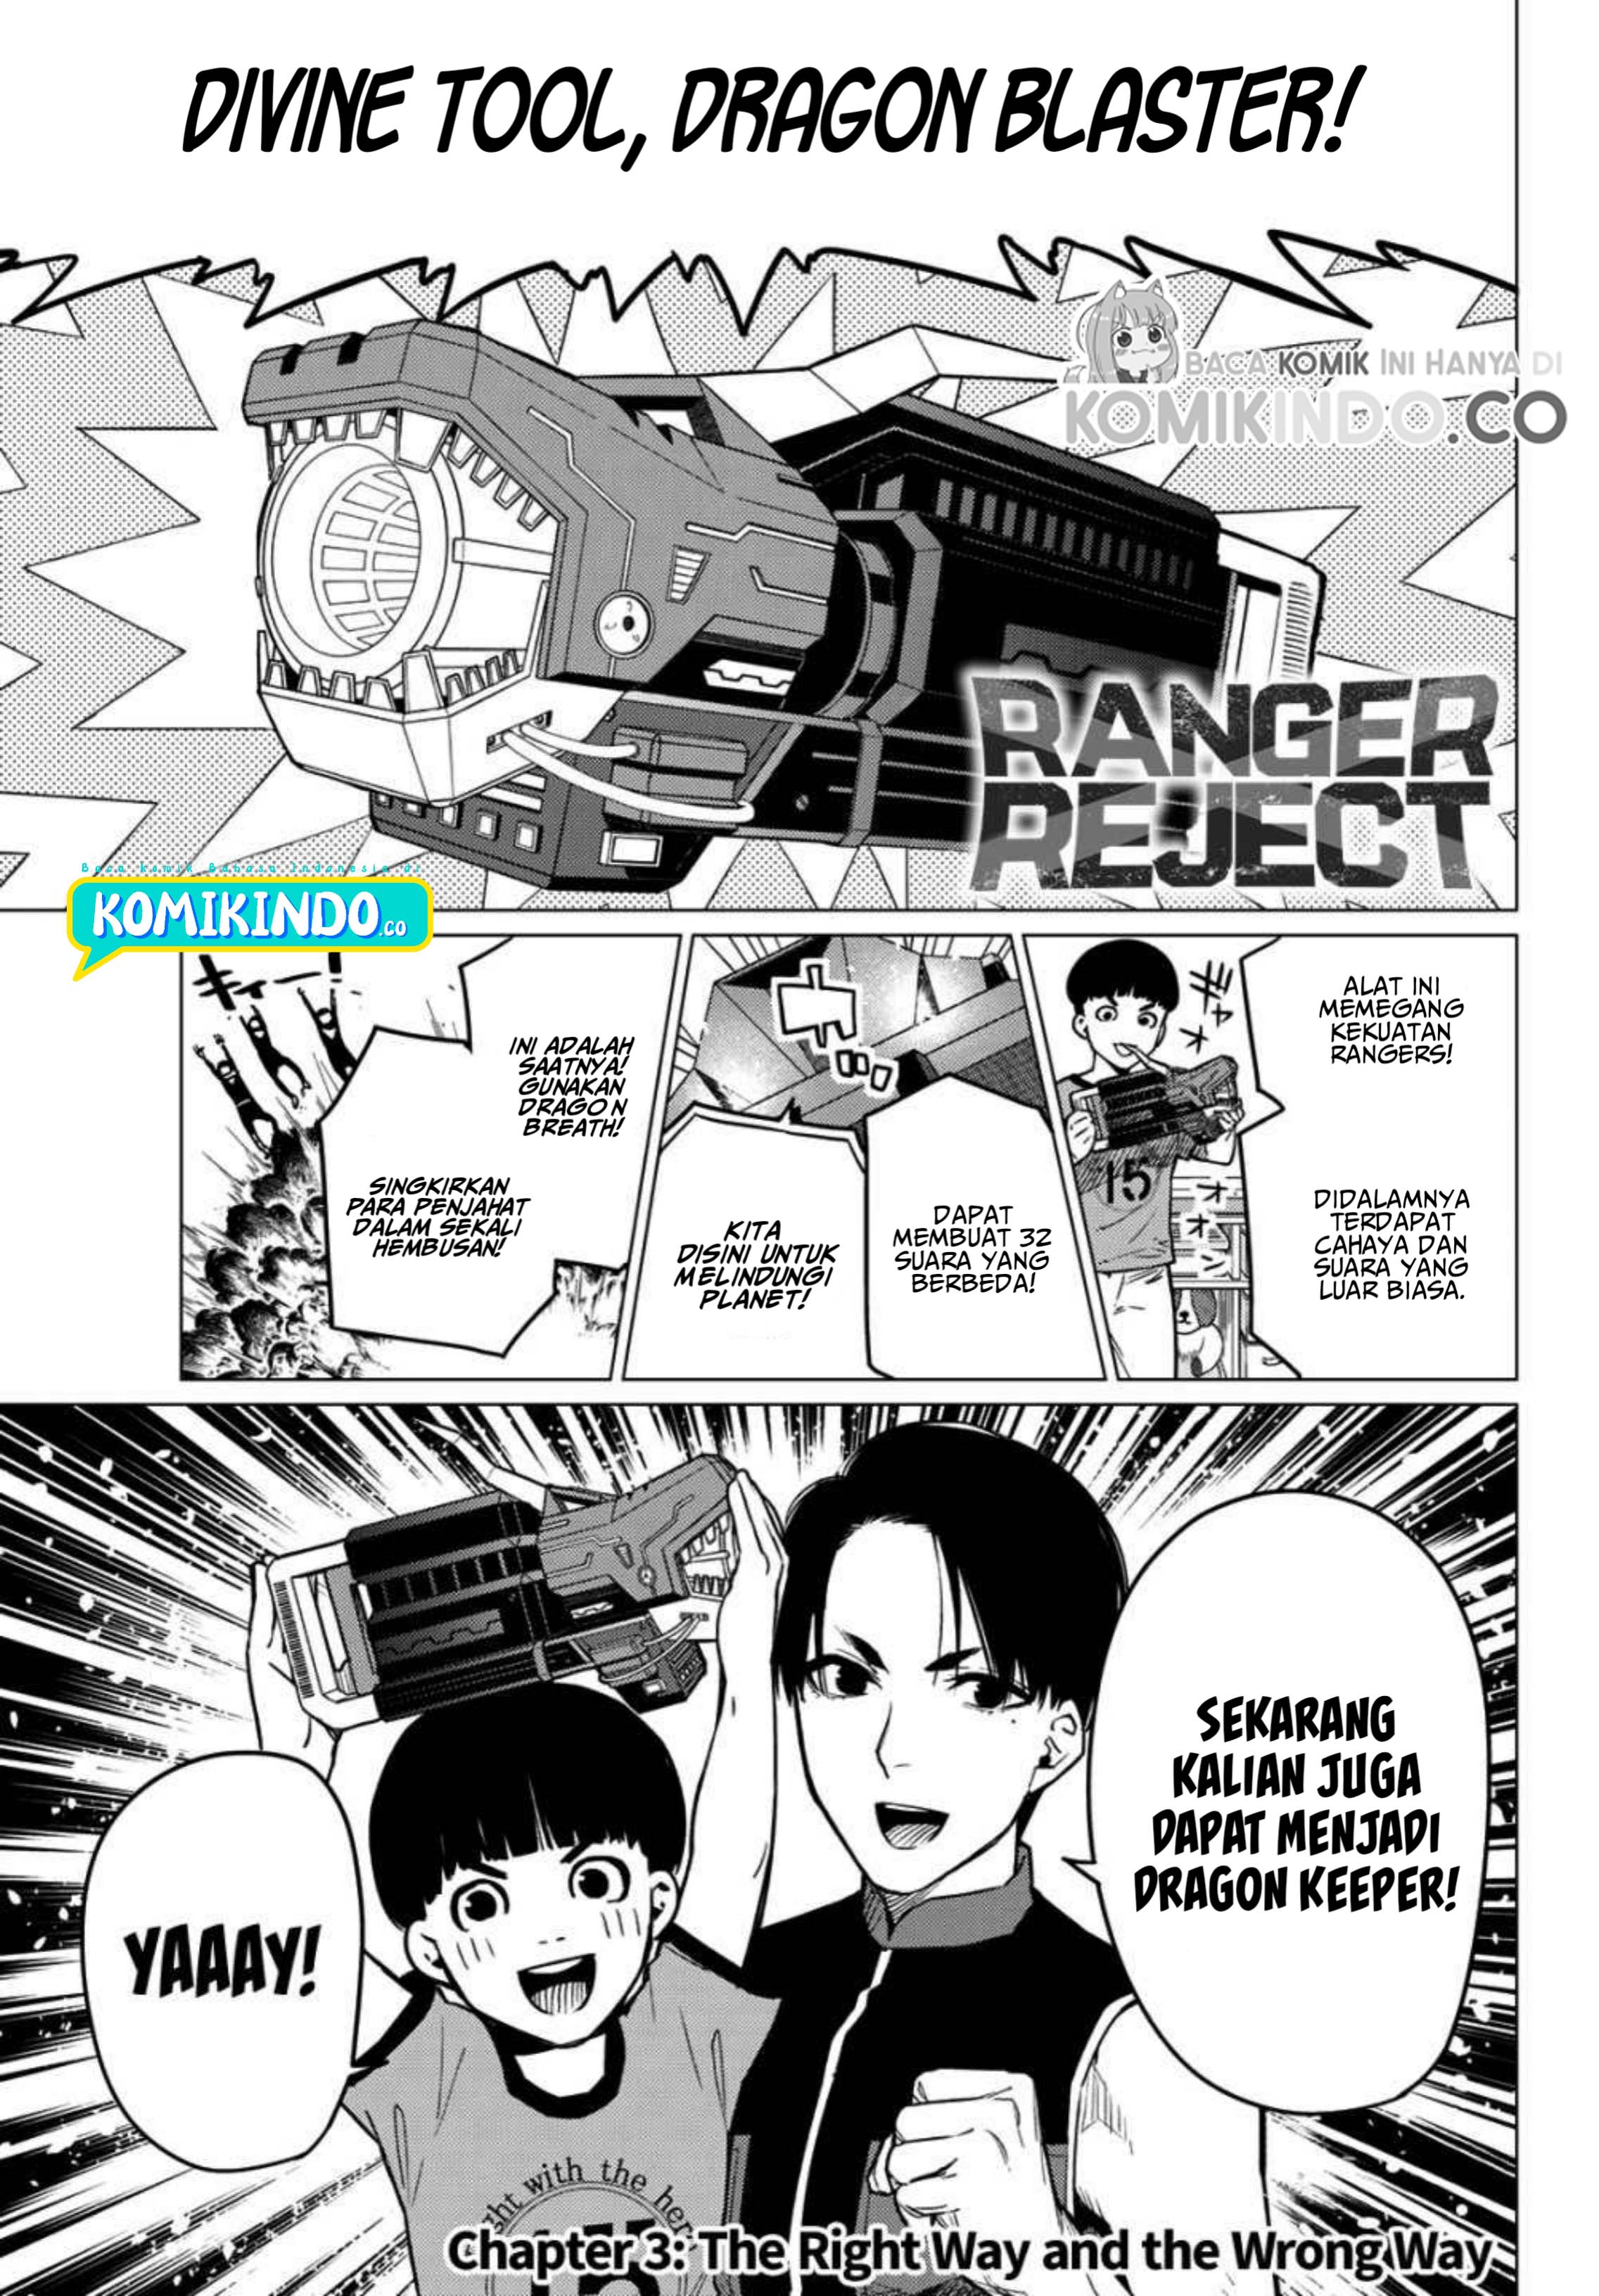 Ranger Reject Chapter 03